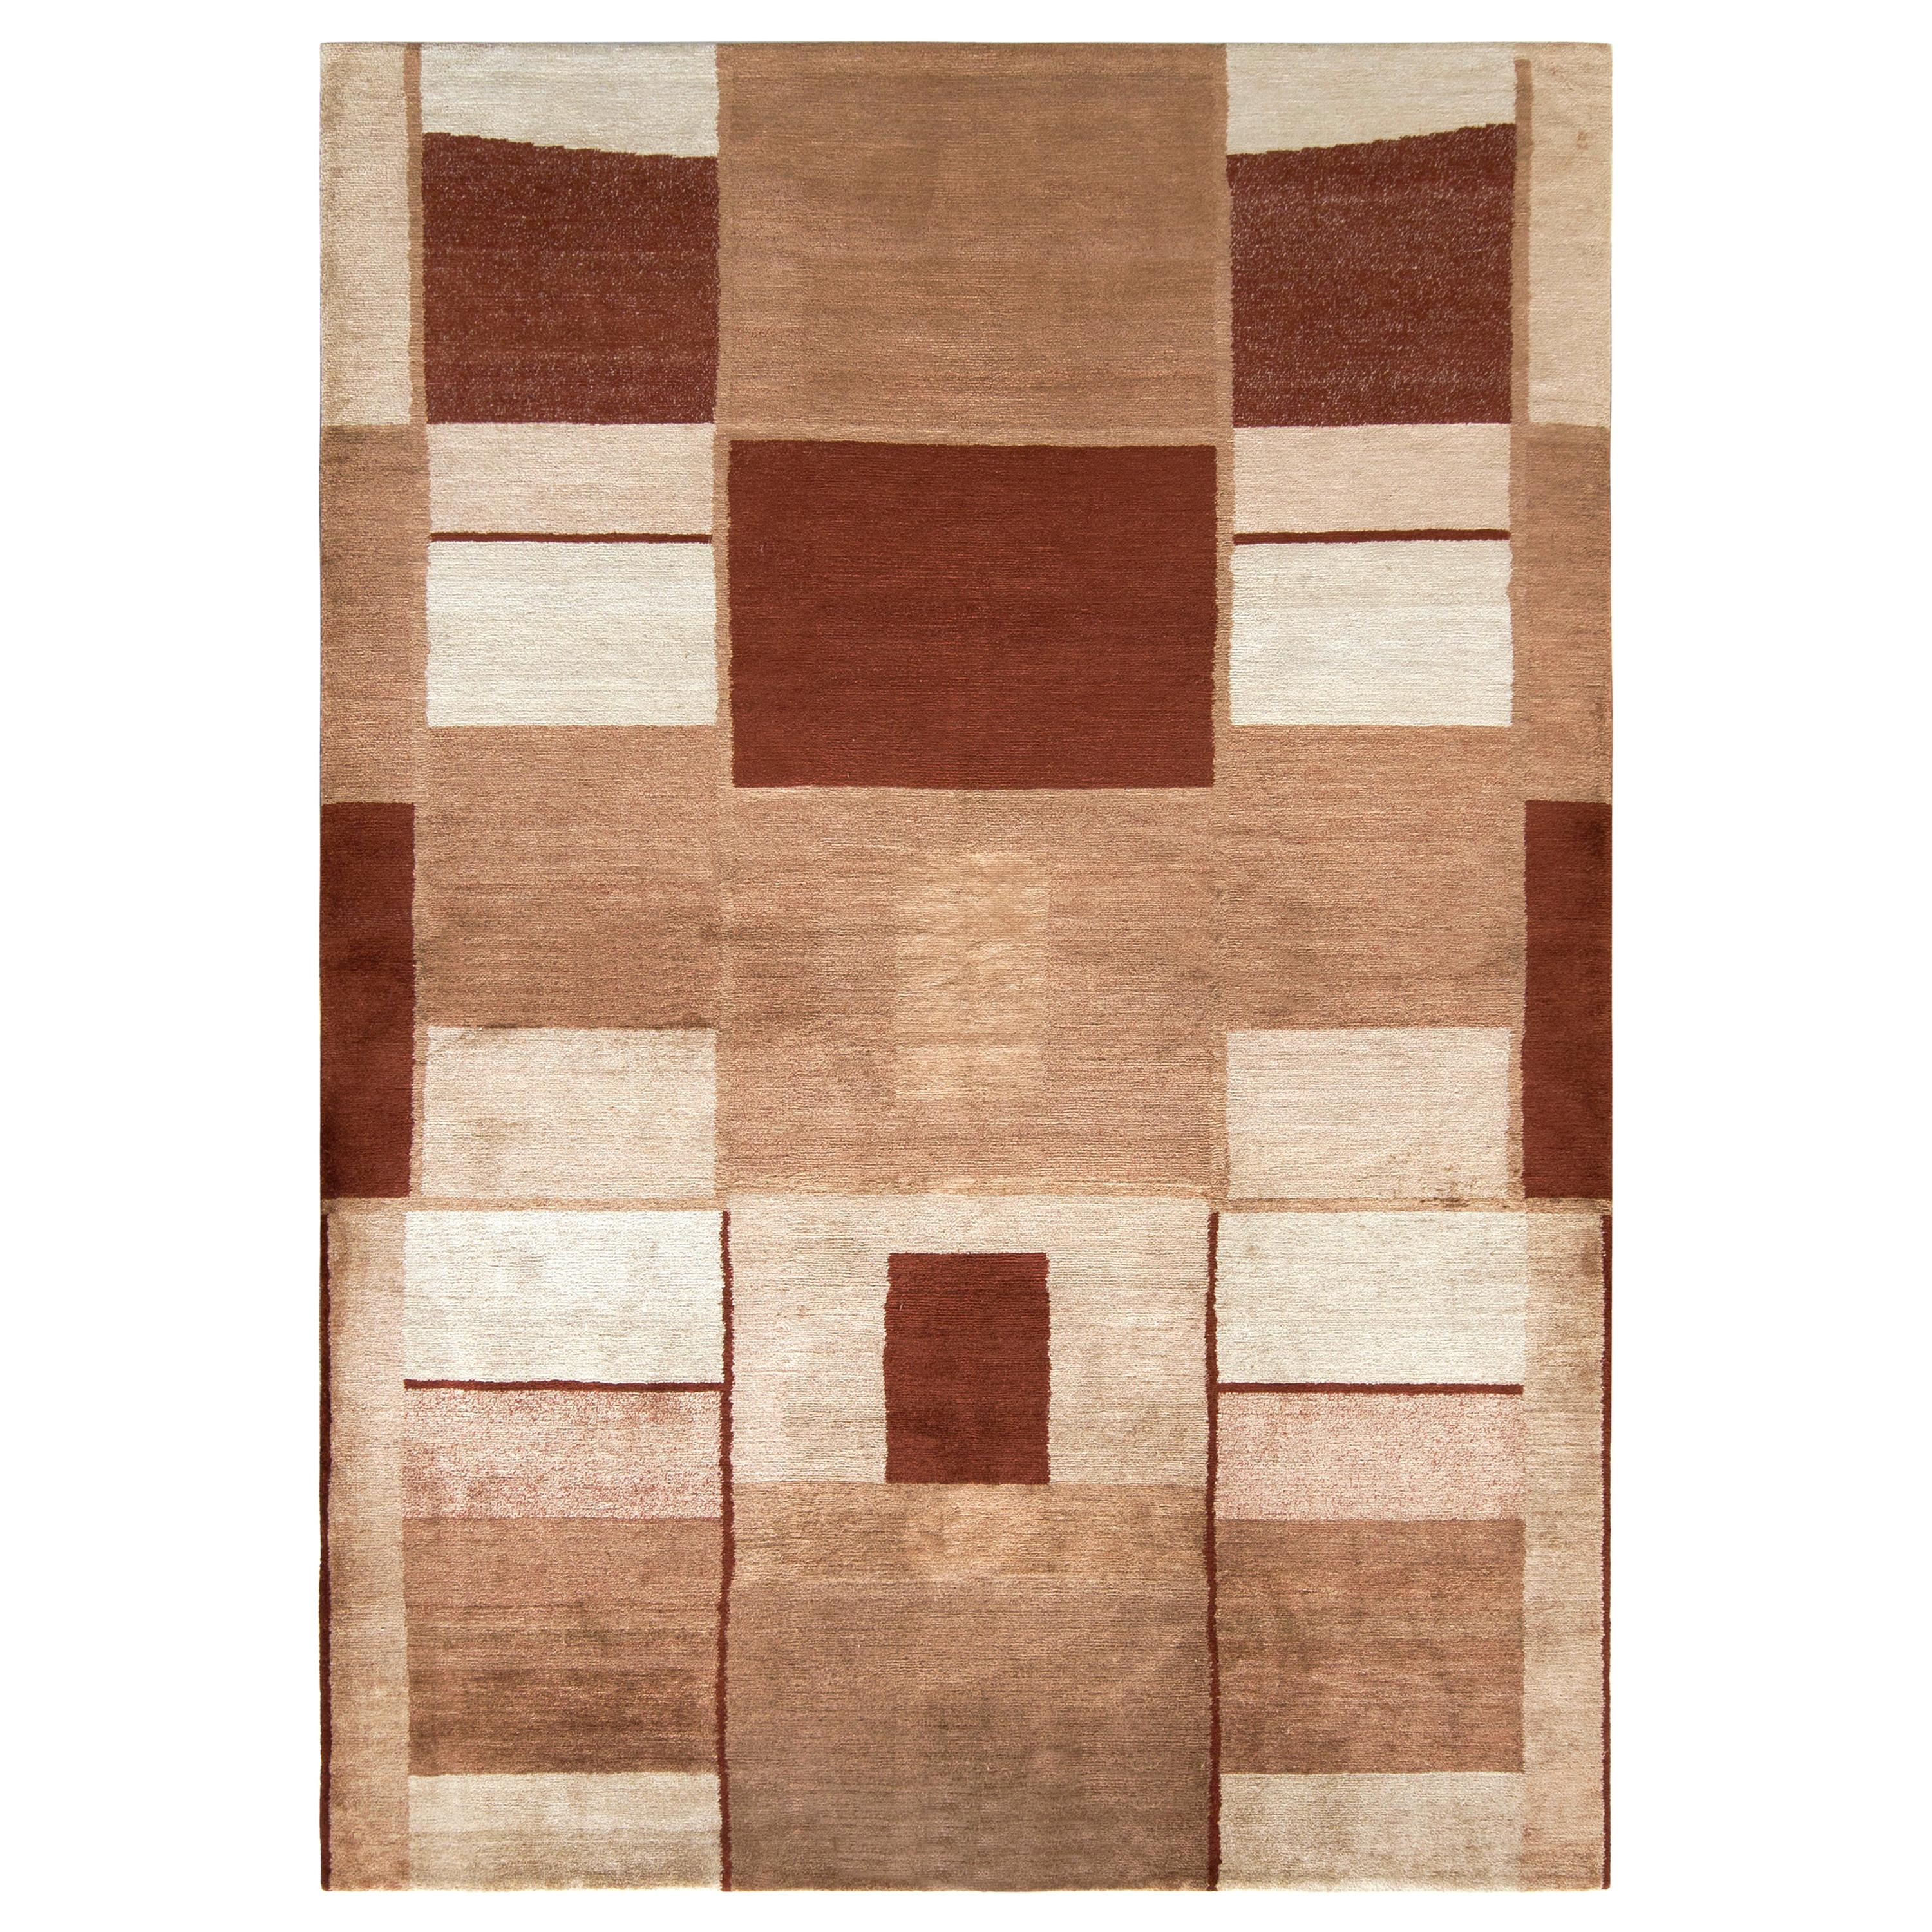 Rug & Kilim’s Modern Cubist Style Rug in Beige Brown Geometric Pattern